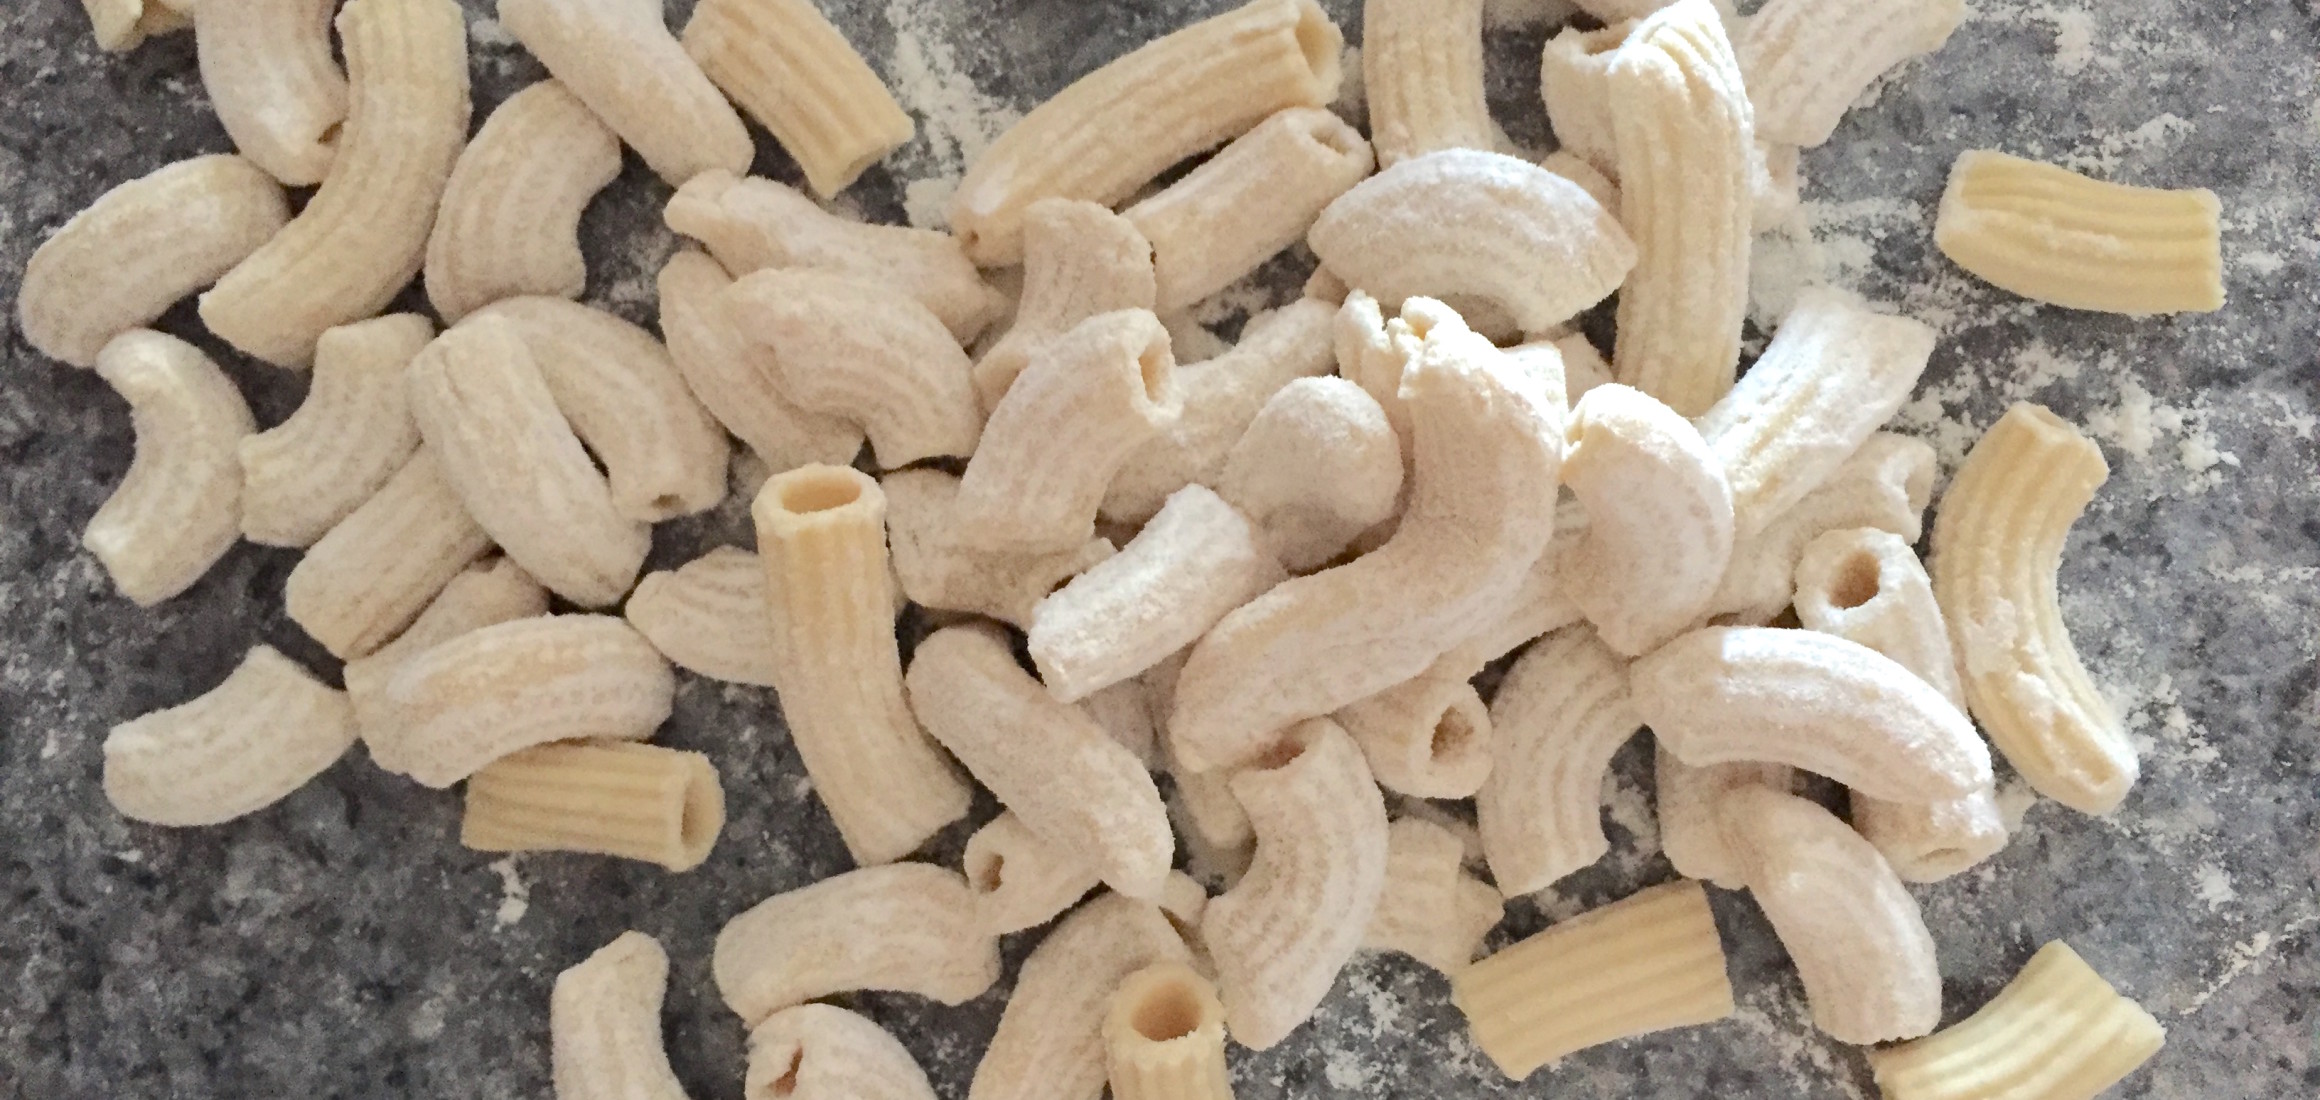 filled pasta shapes